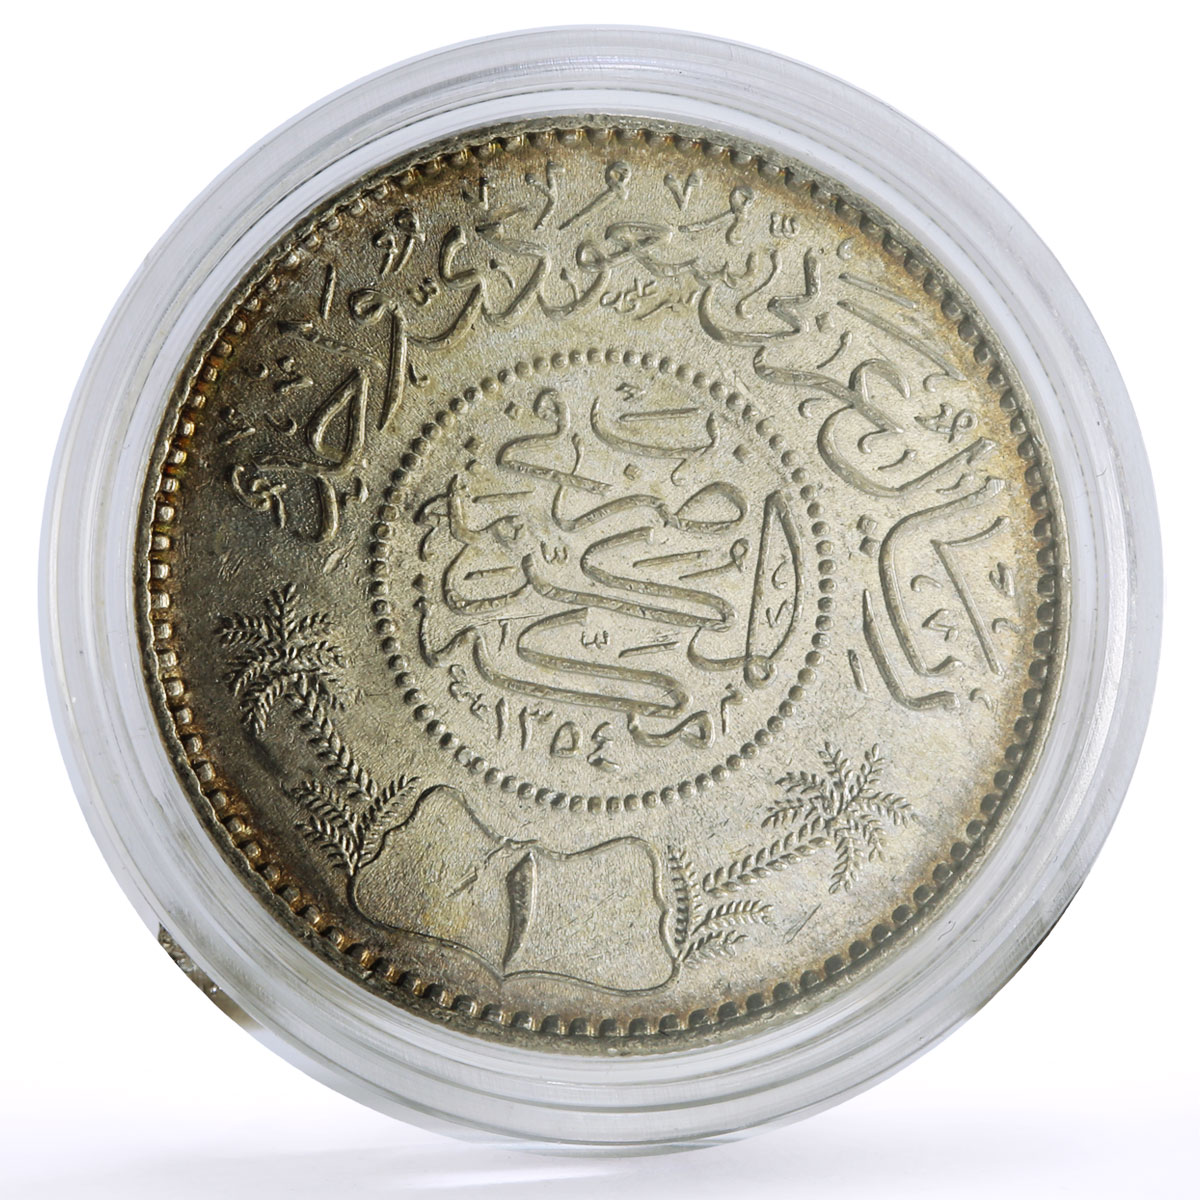 Saudi Arabia 1 riyal King Abd al Aziz Abdulaziz Coinage KM-18 silver coin 1935